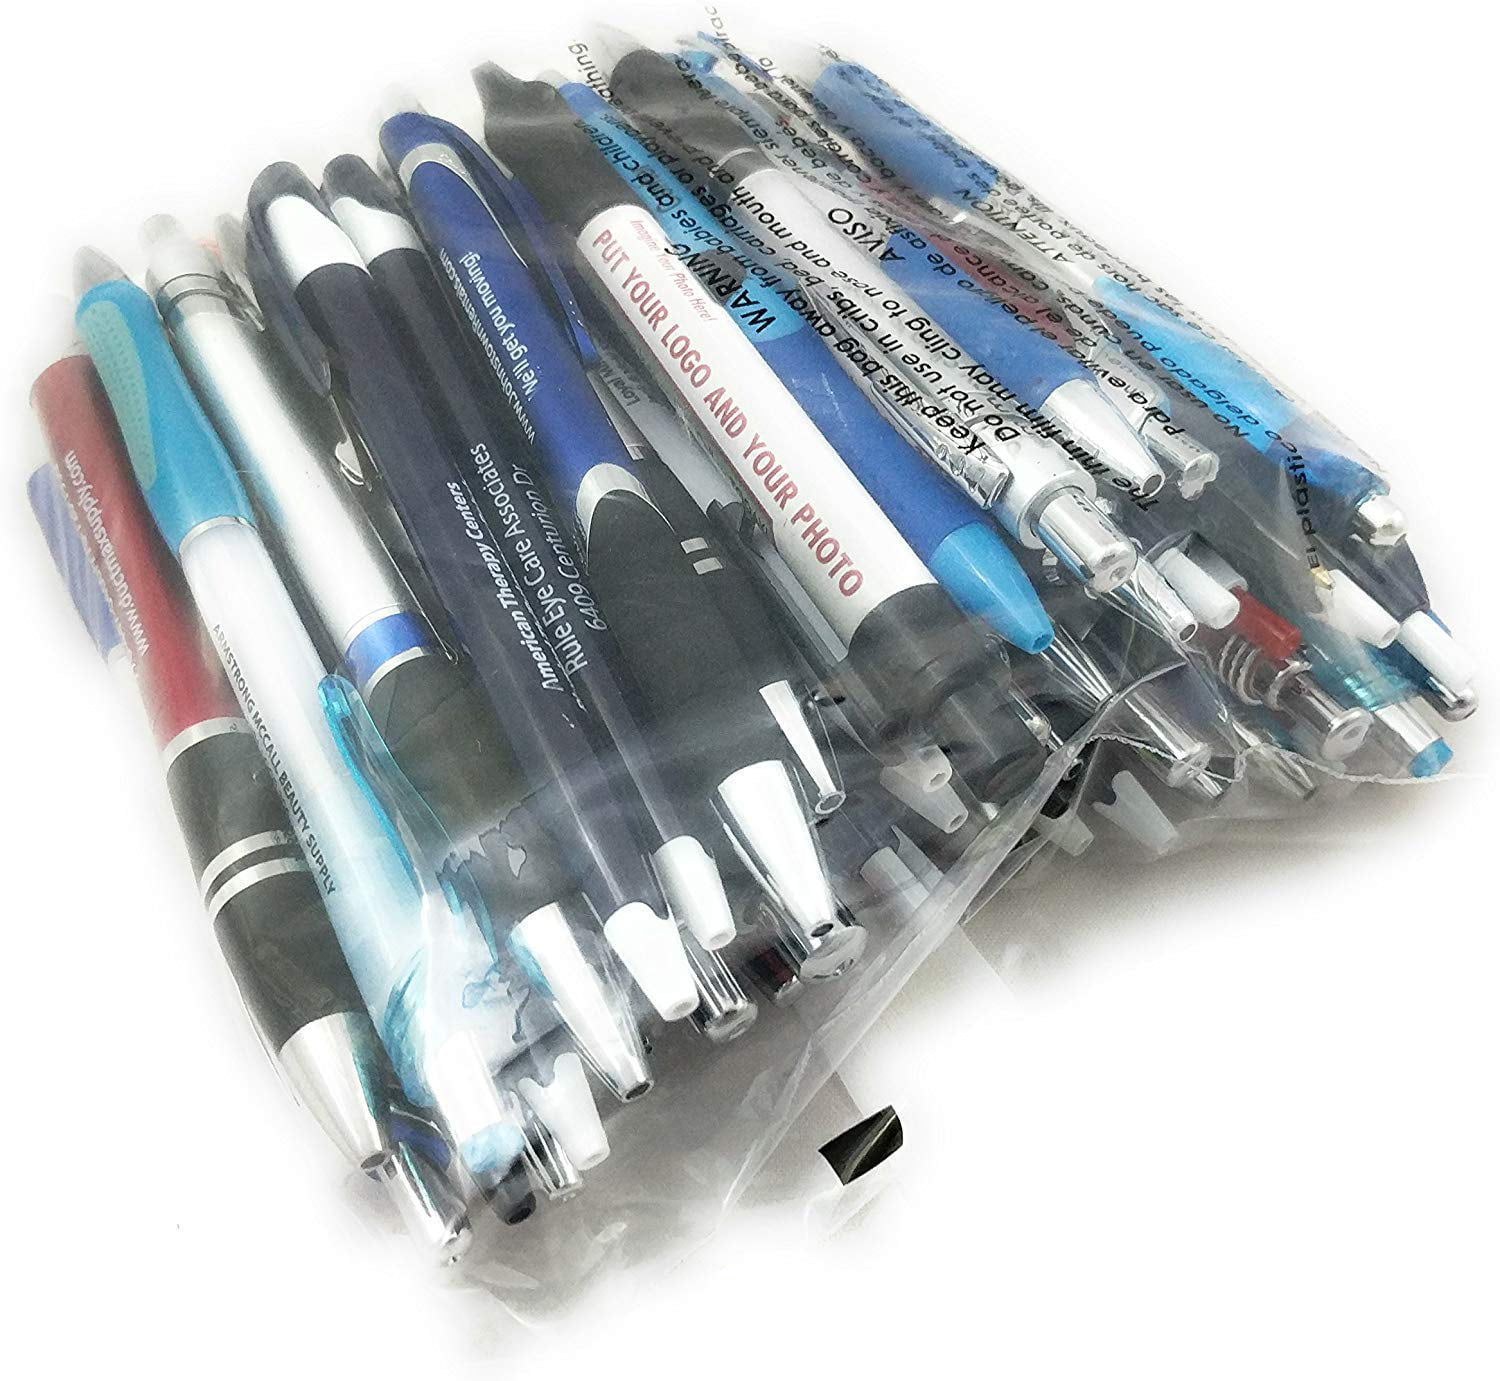 50 Wholesale Lot Misprint Ink Pens 3 COLOR "Clicker" Type Pens Red Black Blue 